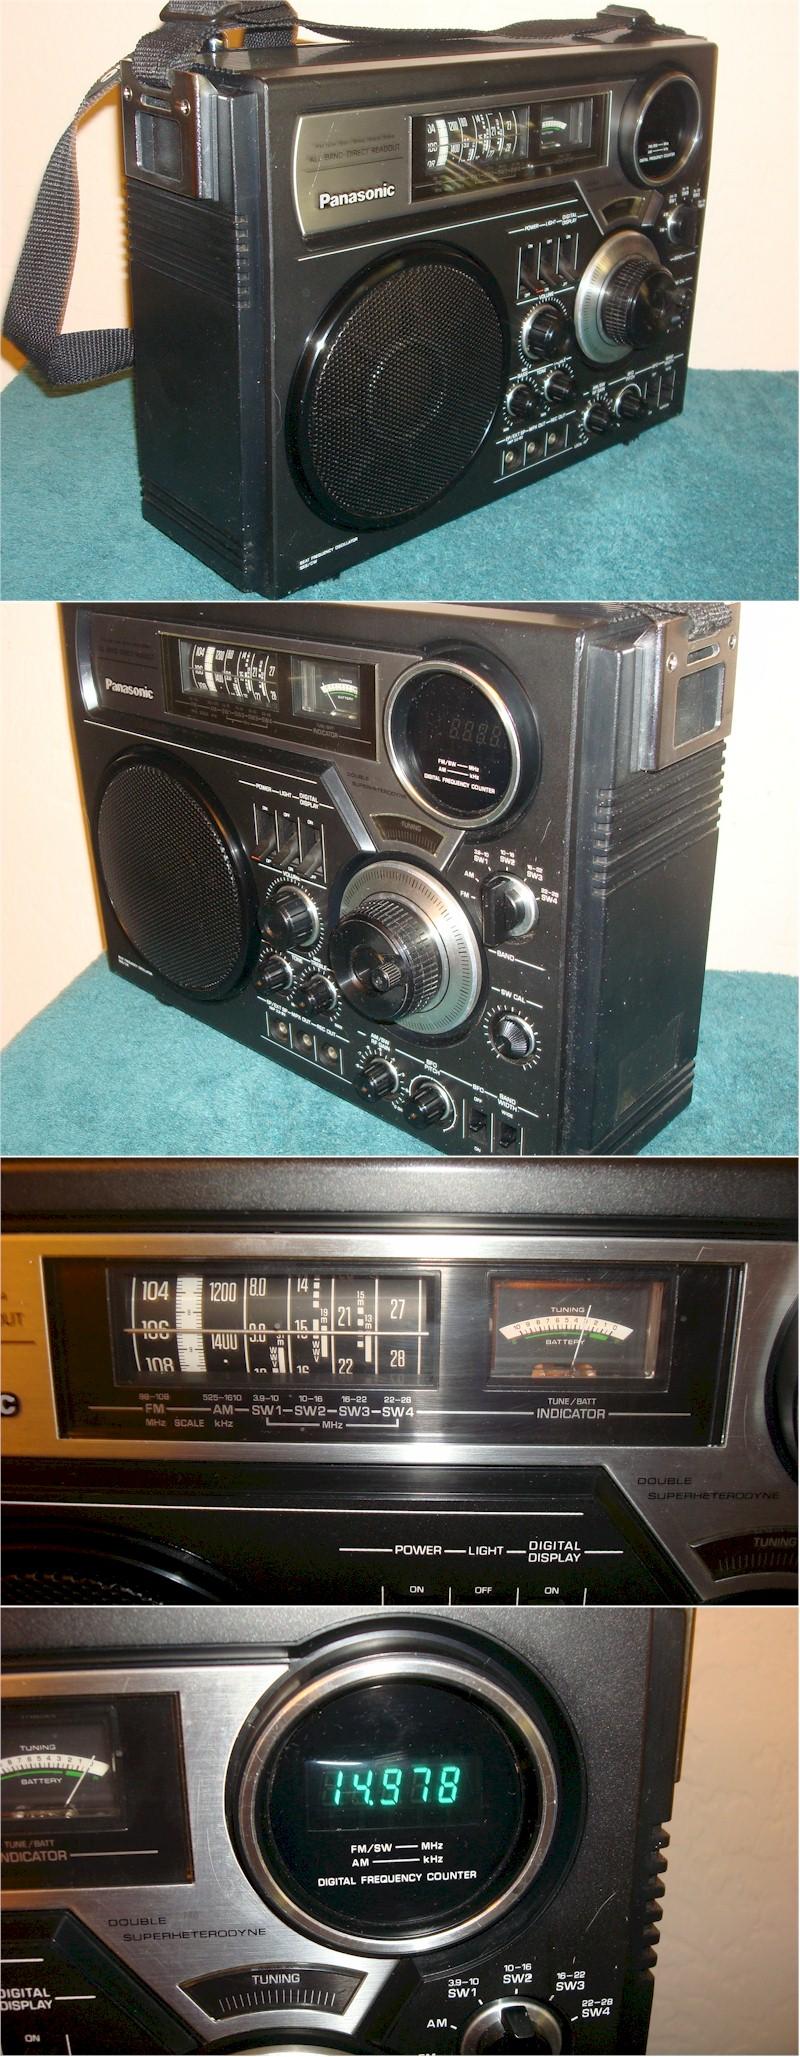 Panasonic RF-2600 Multiband Portable (1979-1981)